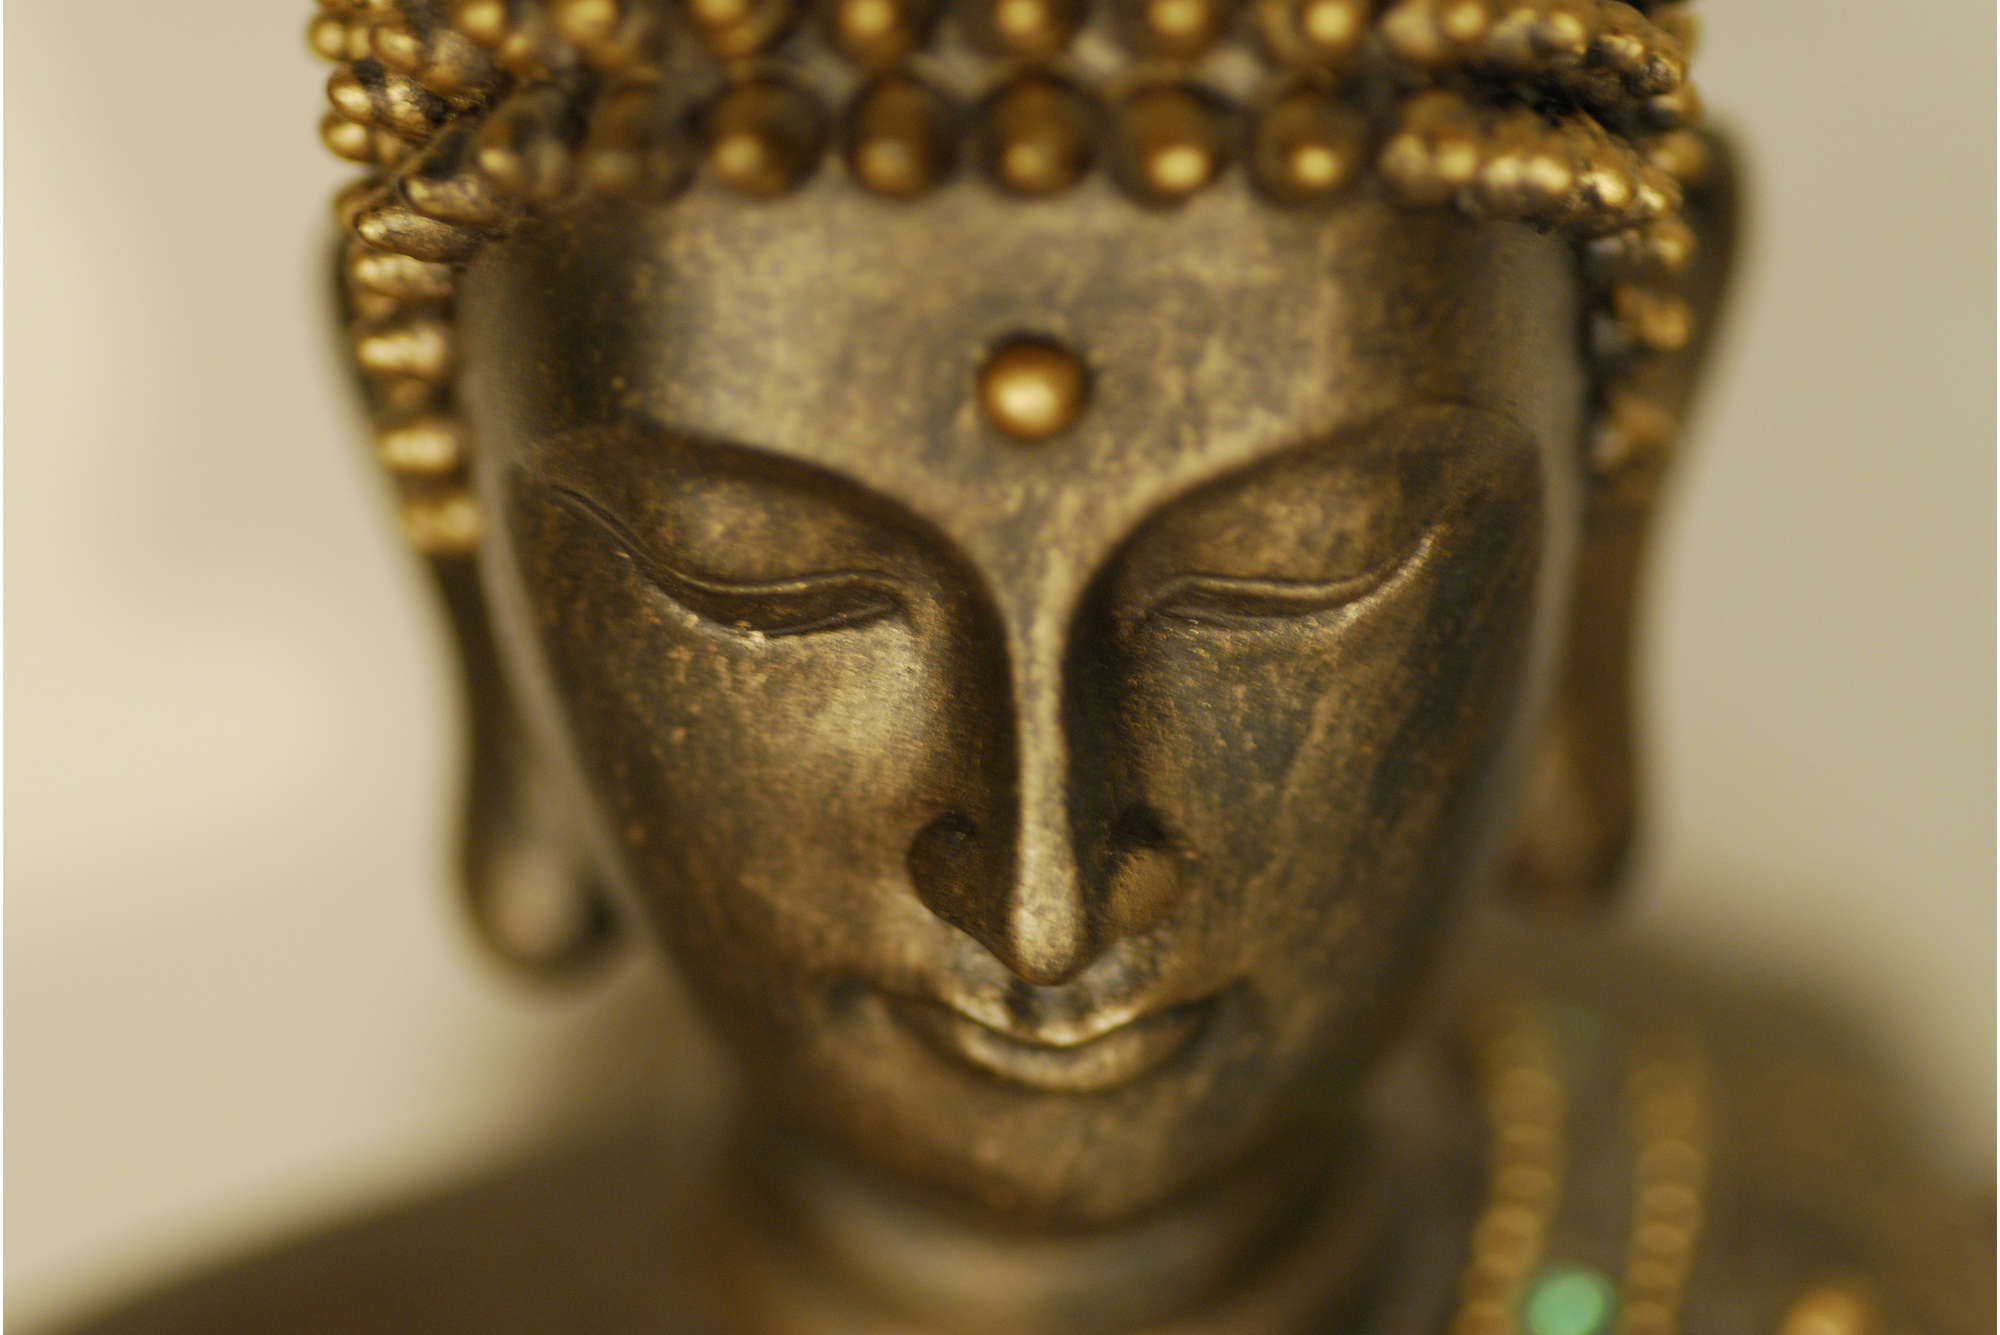             Fotobehang close-up van Boeddha figuur - mat glad vlies
        